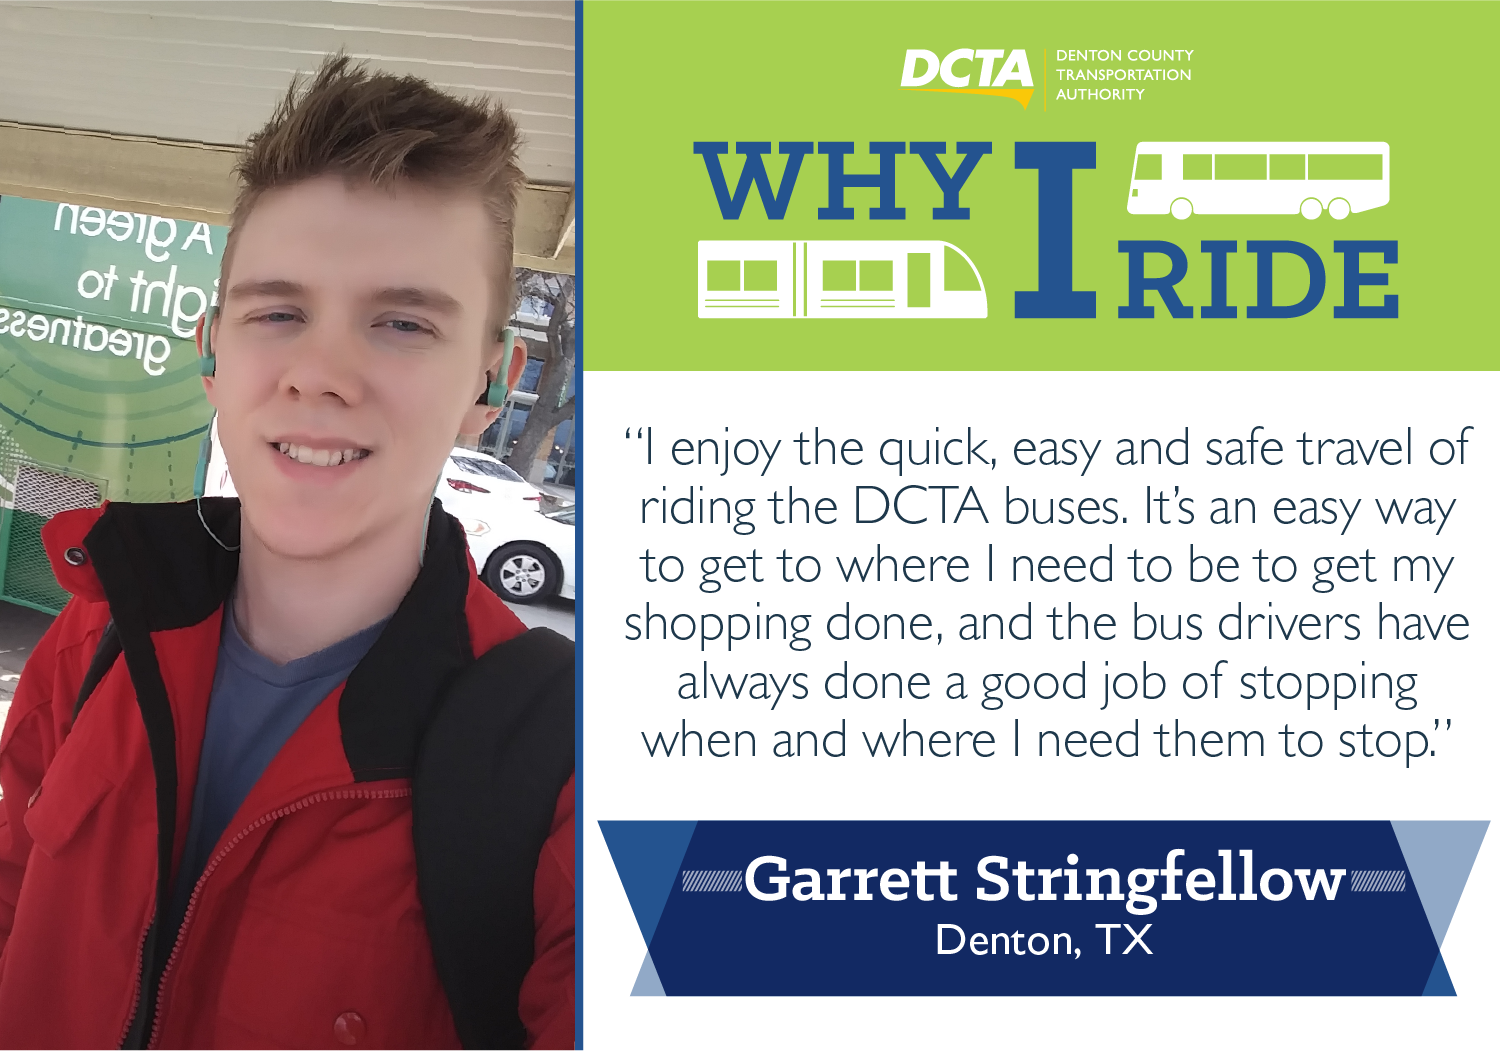 #WhyIRideDCTA: Garrett Stringfellow